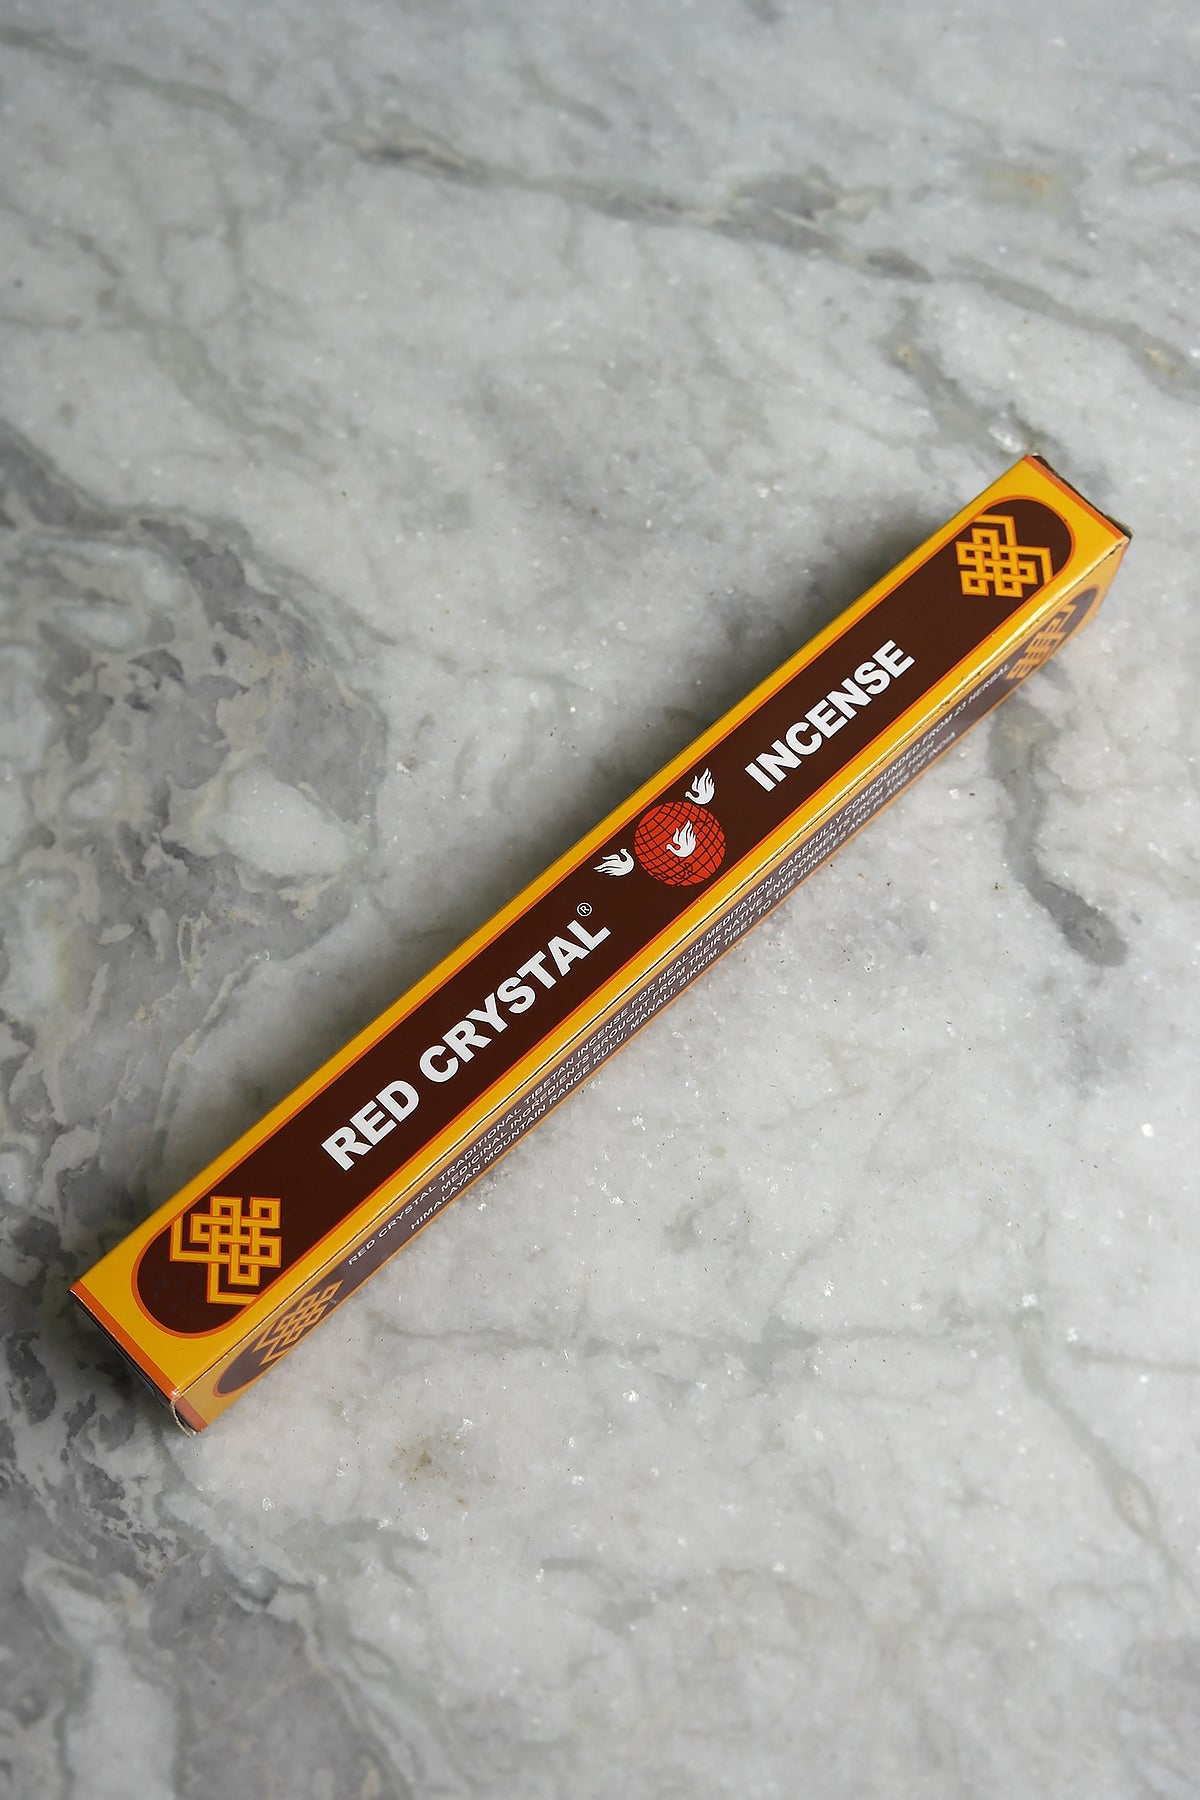 Red Crystal Original Tibetan Incense sticks